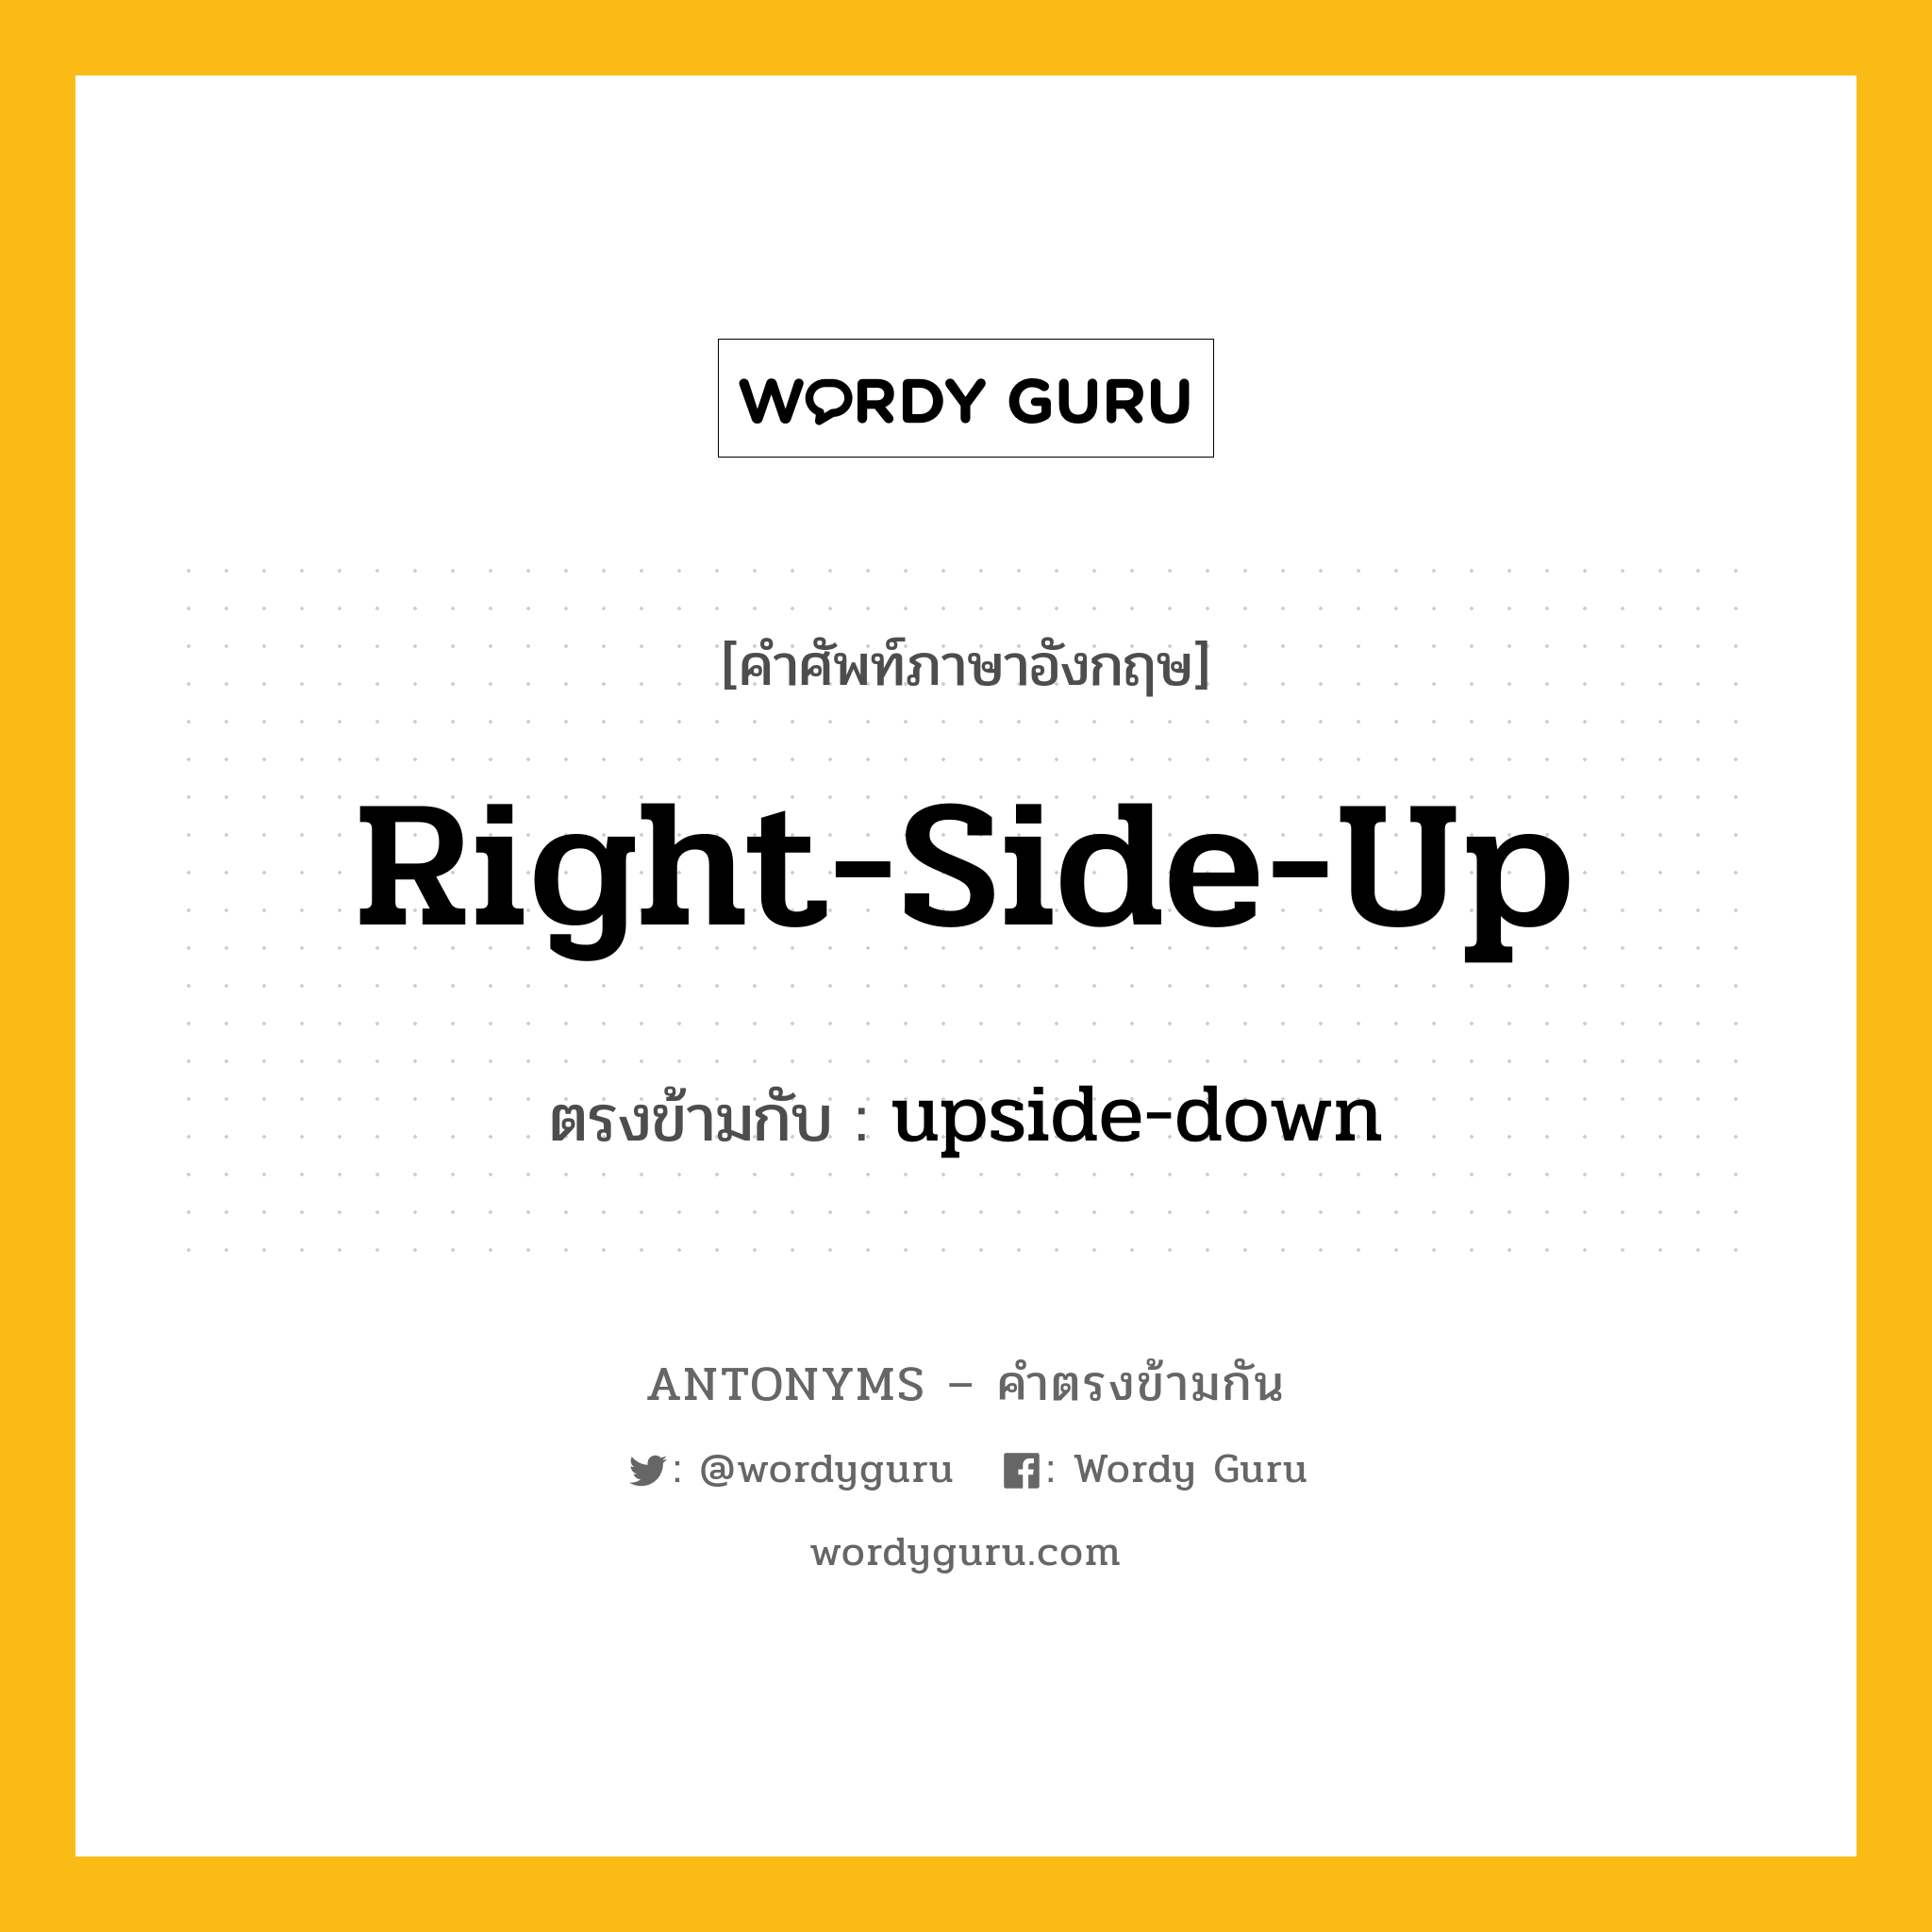 right-side-up เป็นคำตรงข้ามกับคำไหนบ้าง?, คำศัพท์ภาษาอังกฤษ right-side-up ตรงข้ามกับ upside-down หมวด upside-down